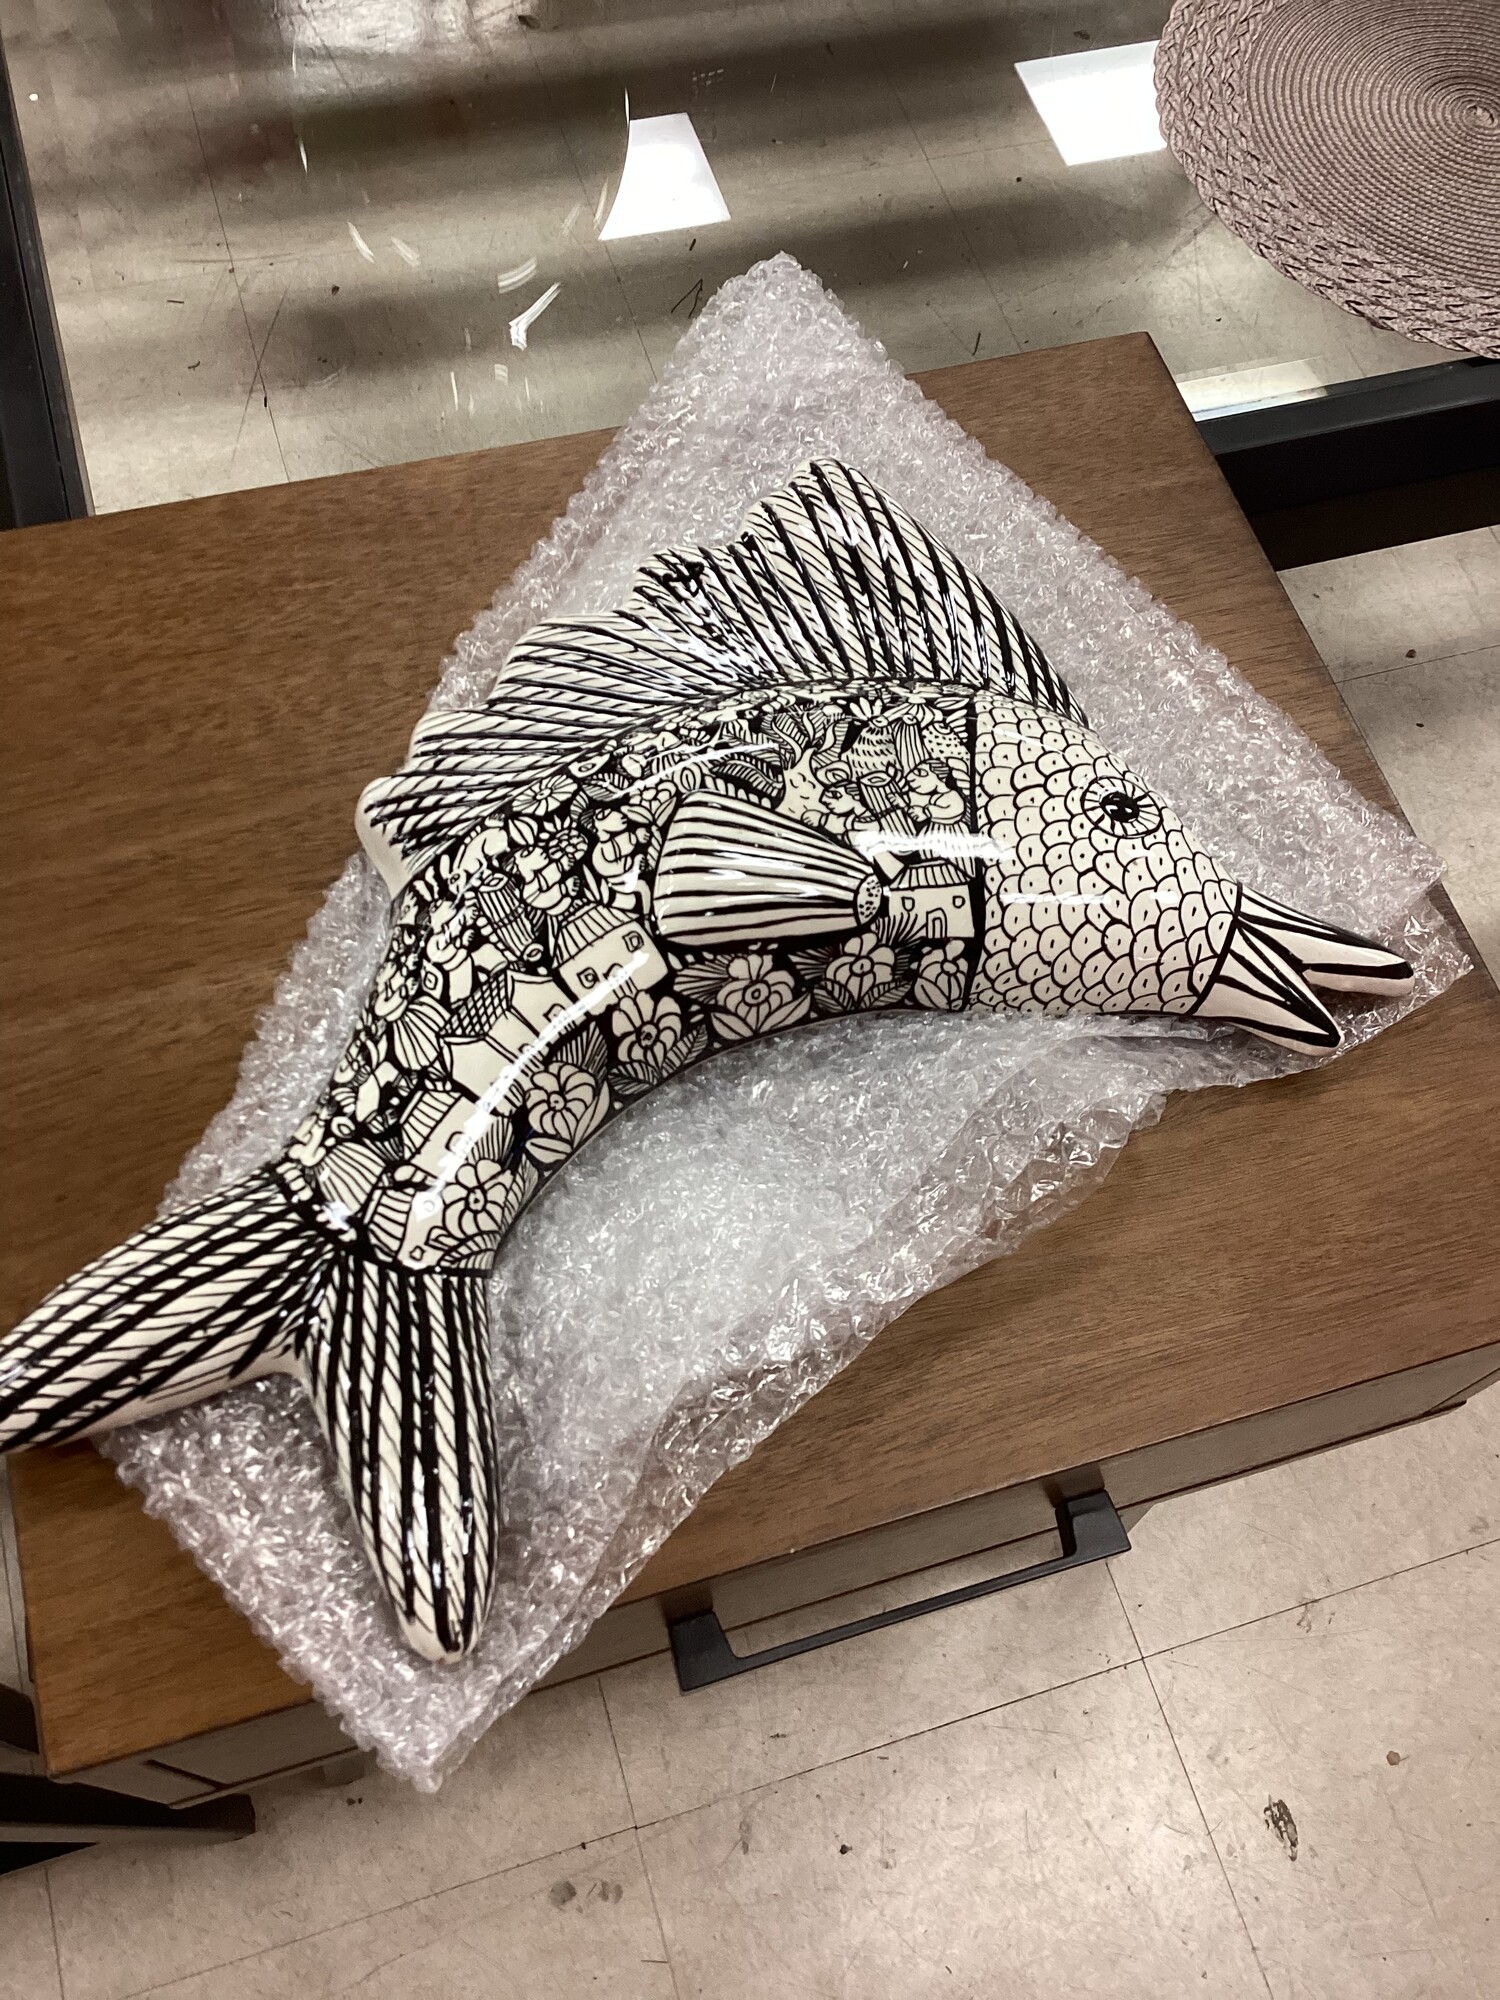 Sword Fish Decor, B+W, Detailed
17 In W x 14 In T